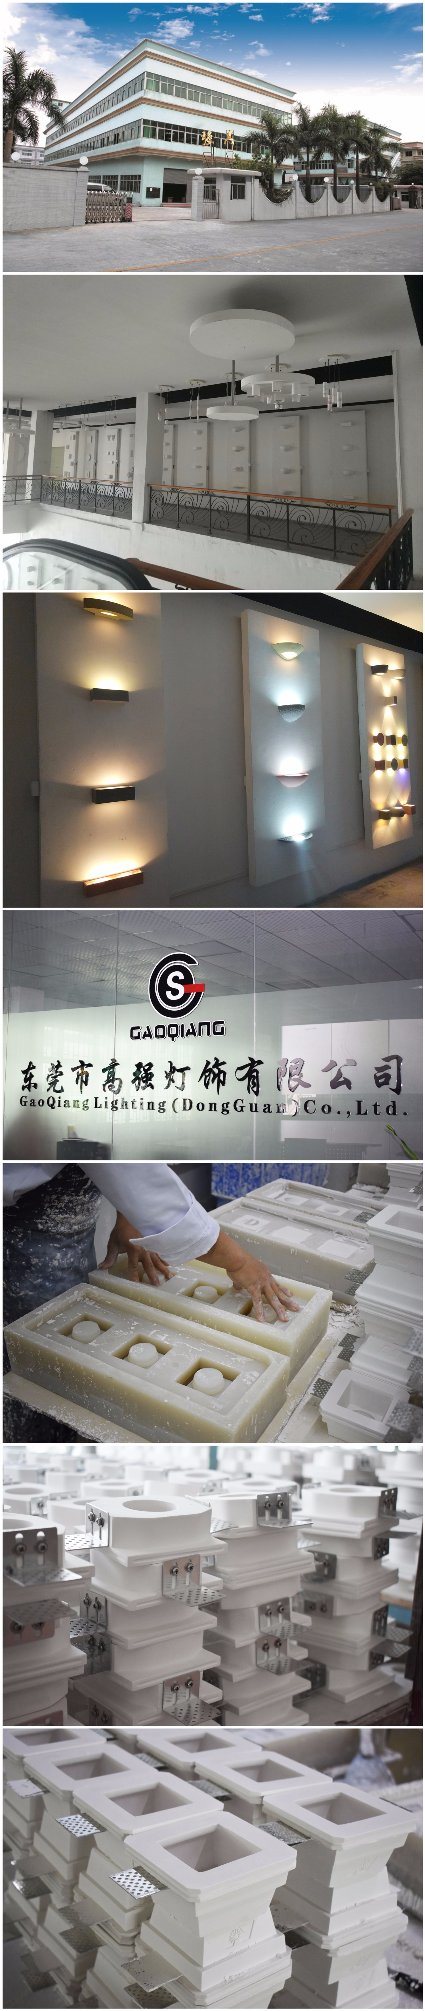 Gaoqiang LED Light Plaster Wall Light